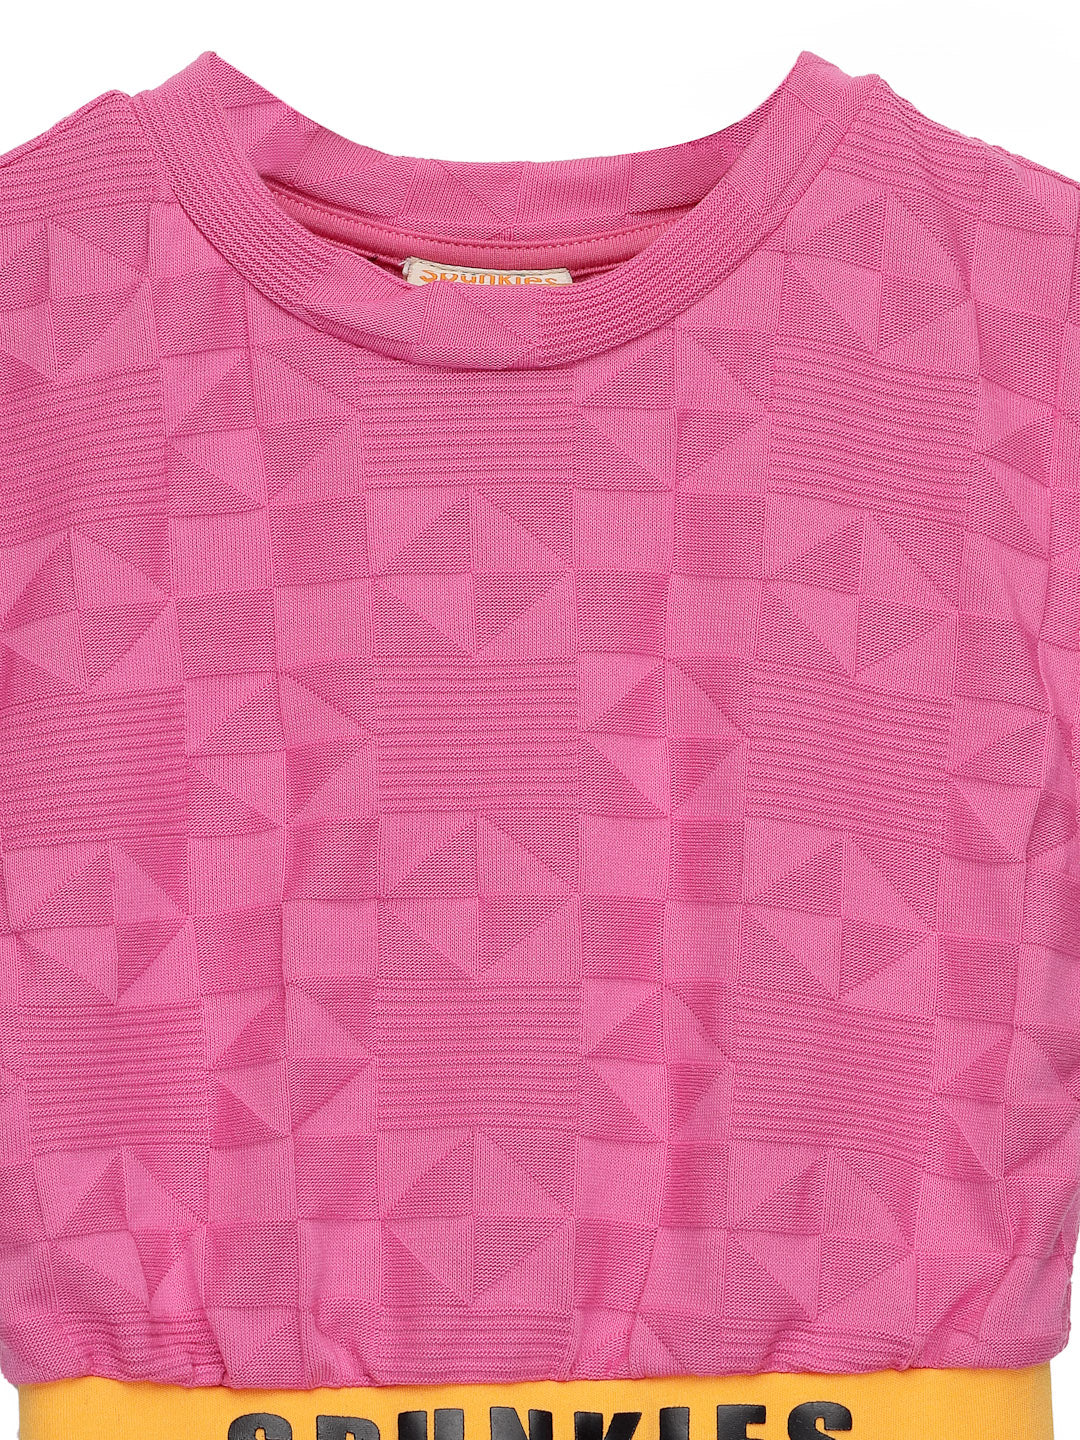 Rose pink trendy G-knit sleeveless top